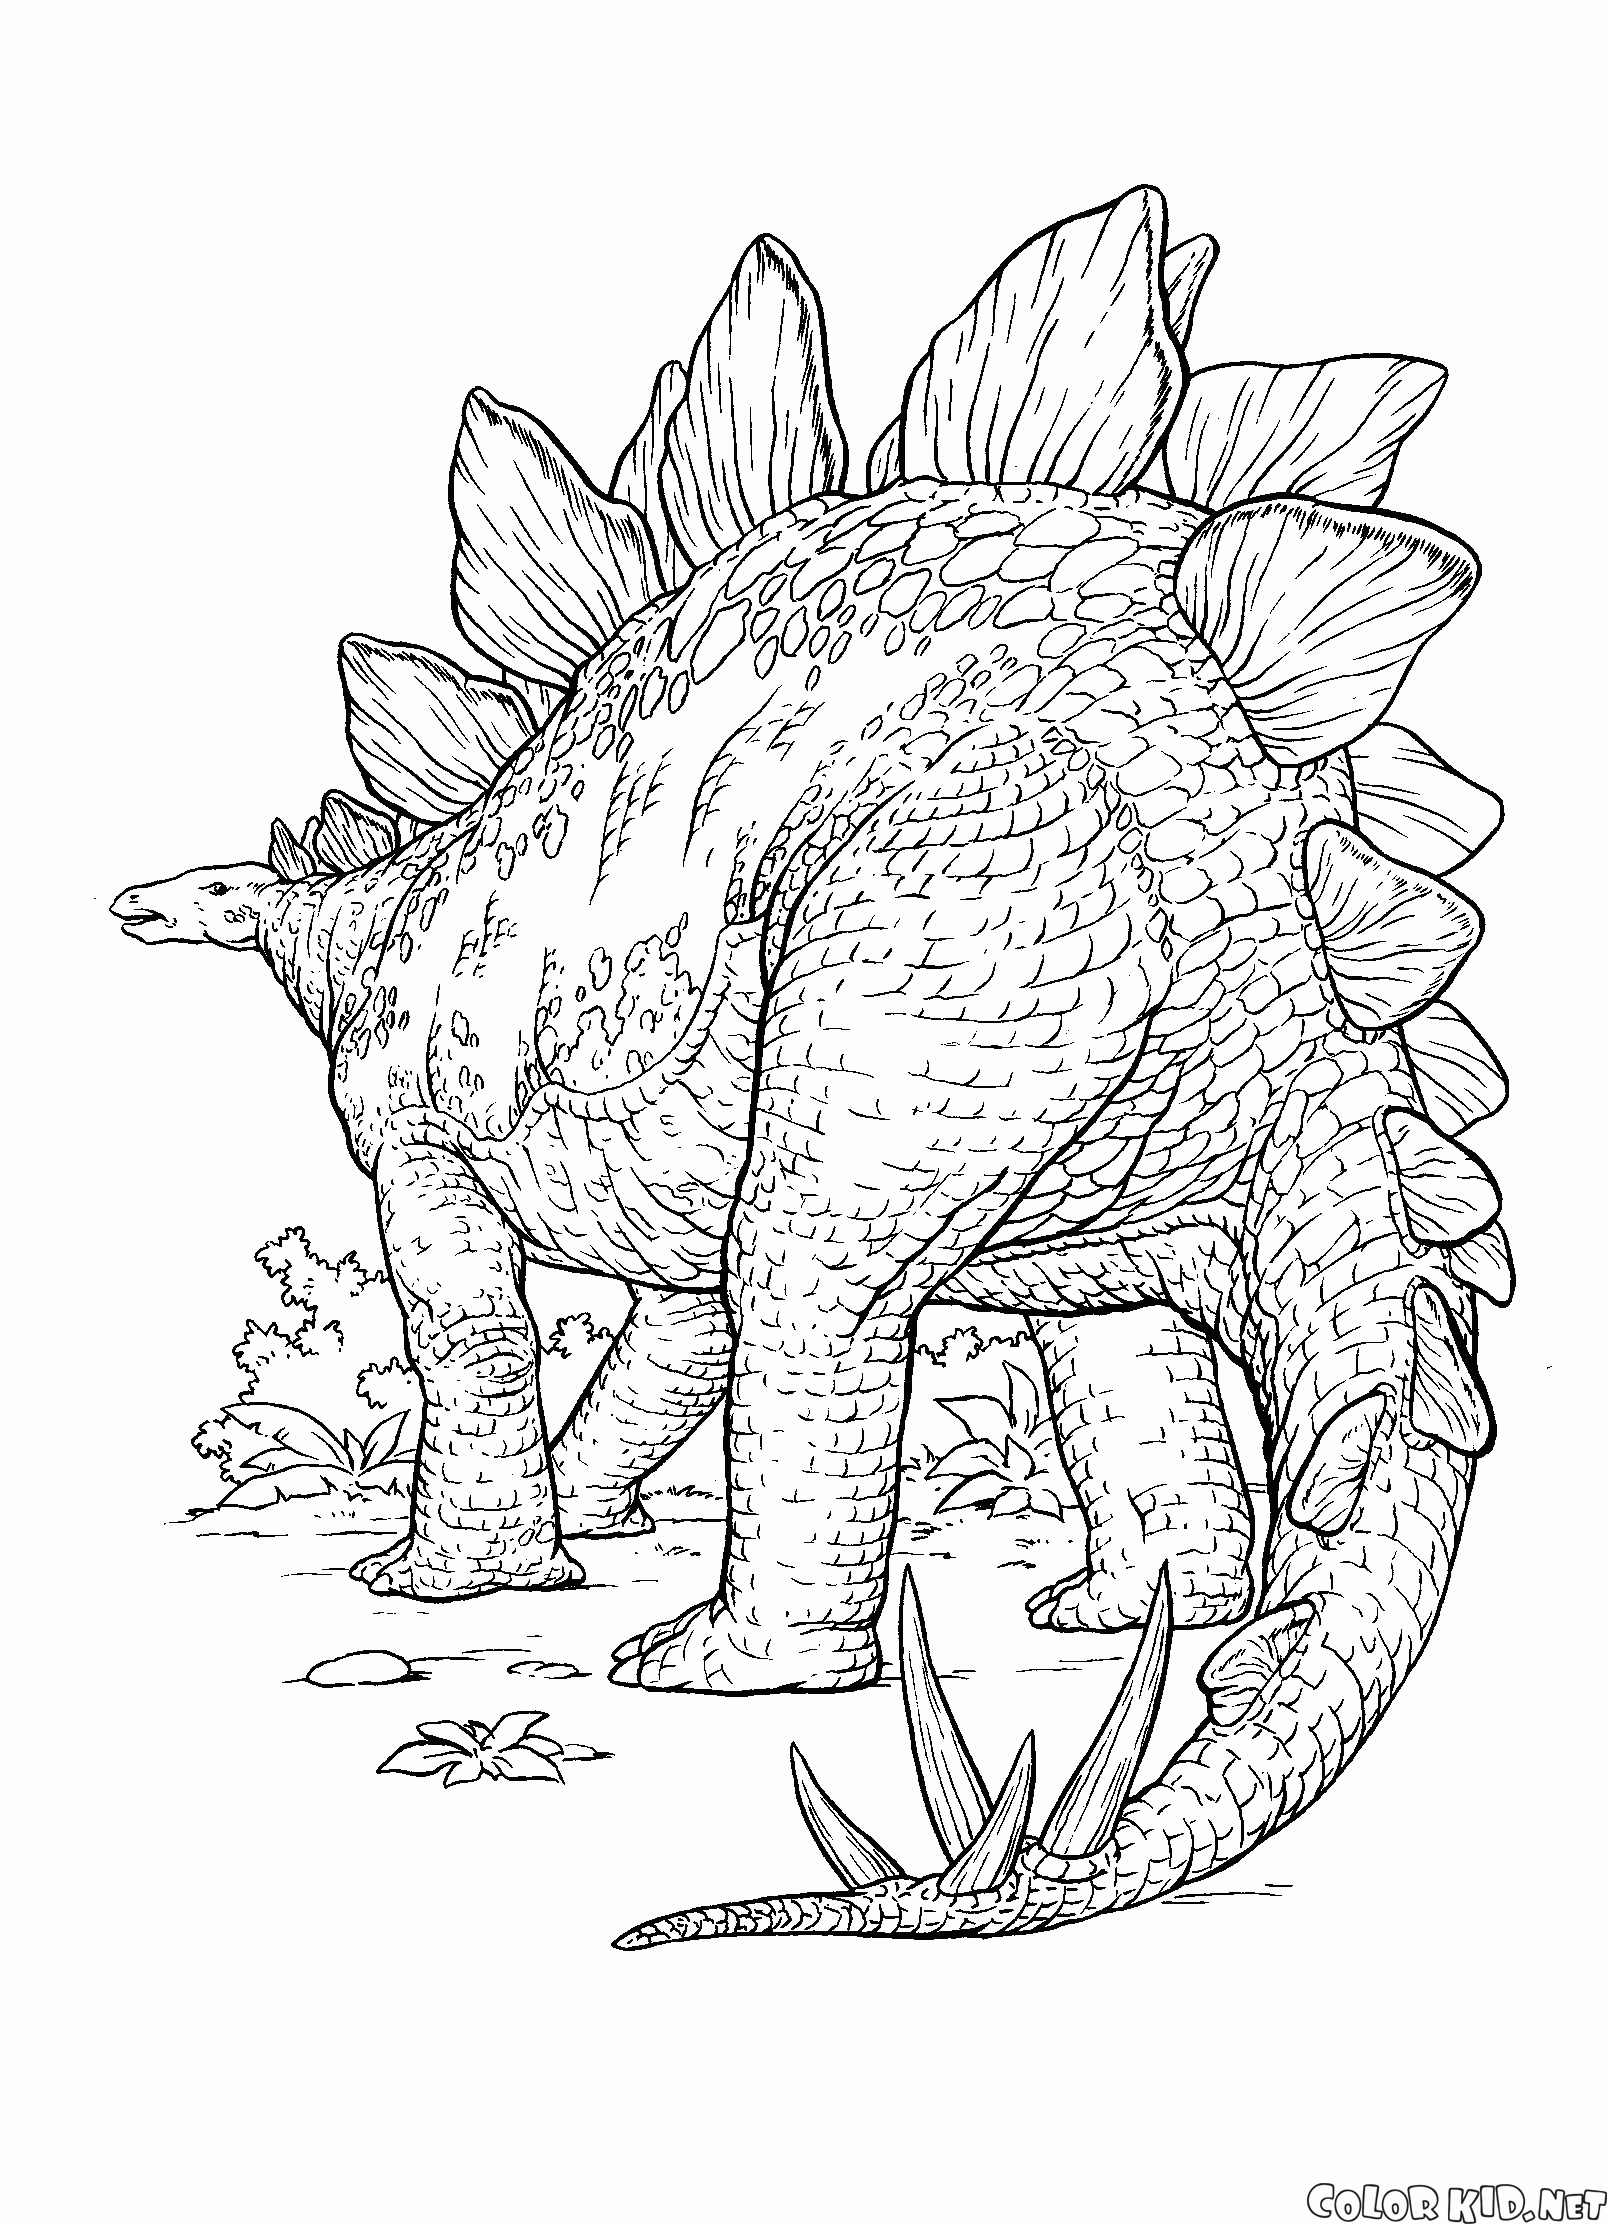 Dinosaur with sharp thorns